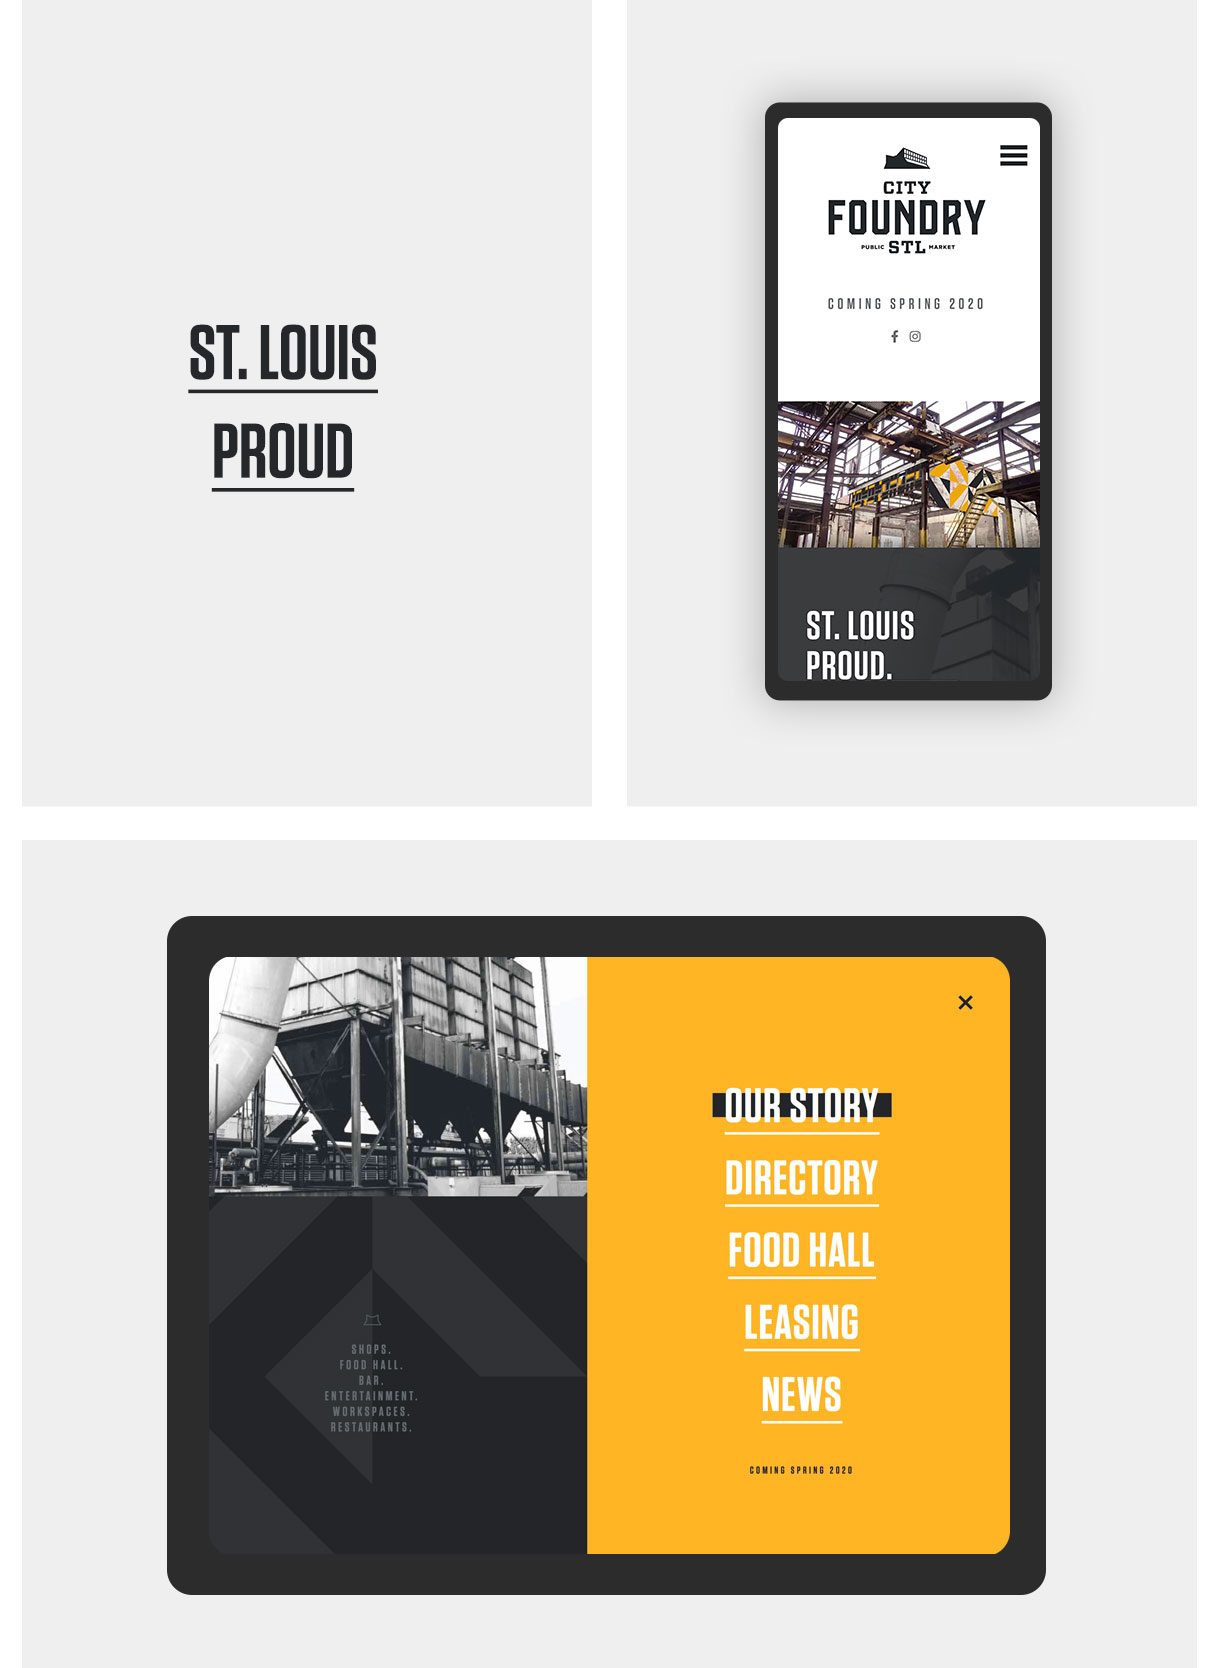 Mobile responsive website design for City Foundry